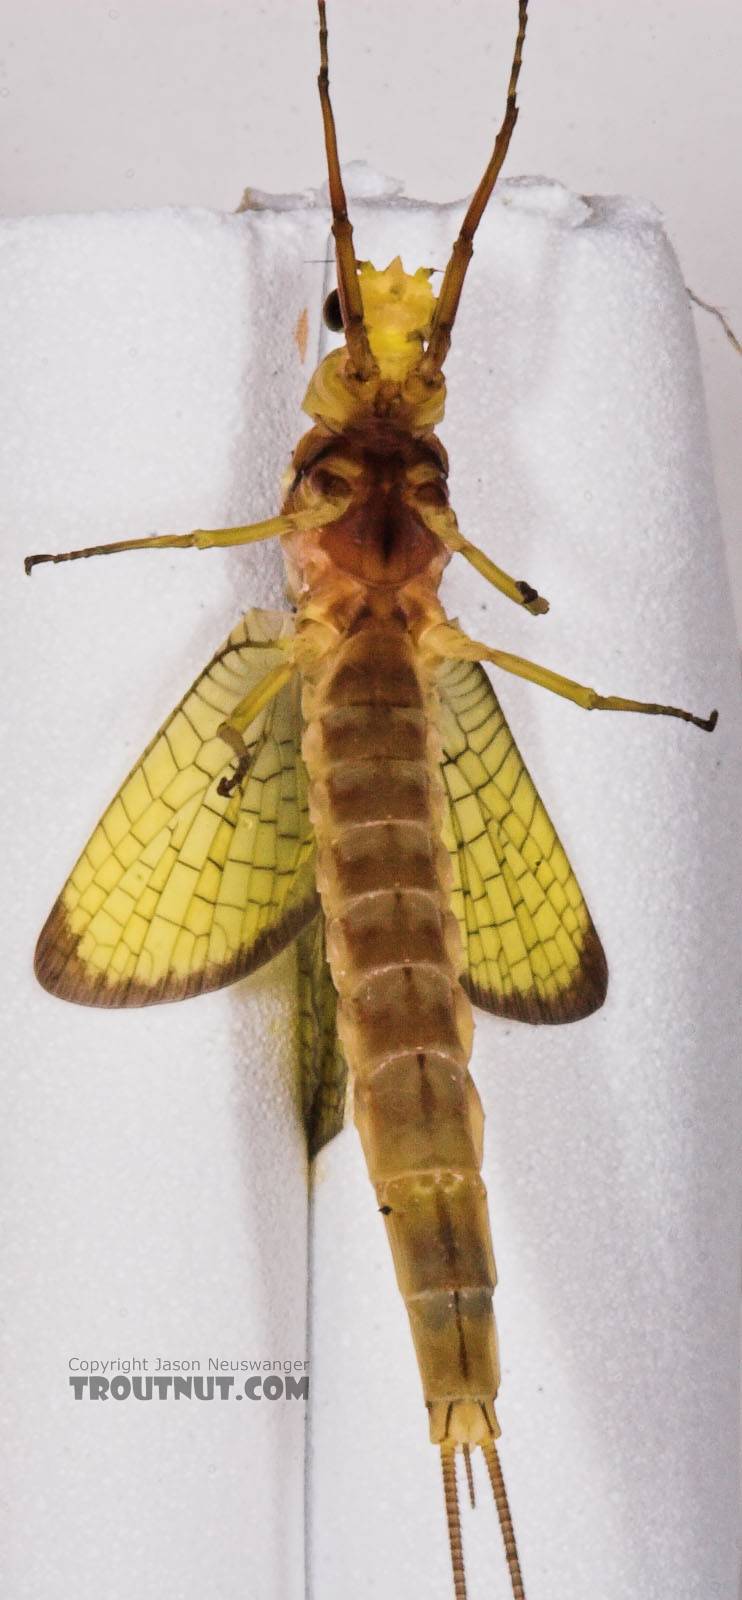 Female Hexagenia limbata (Hex) Mayfly Dun from the White River in Wisconsin